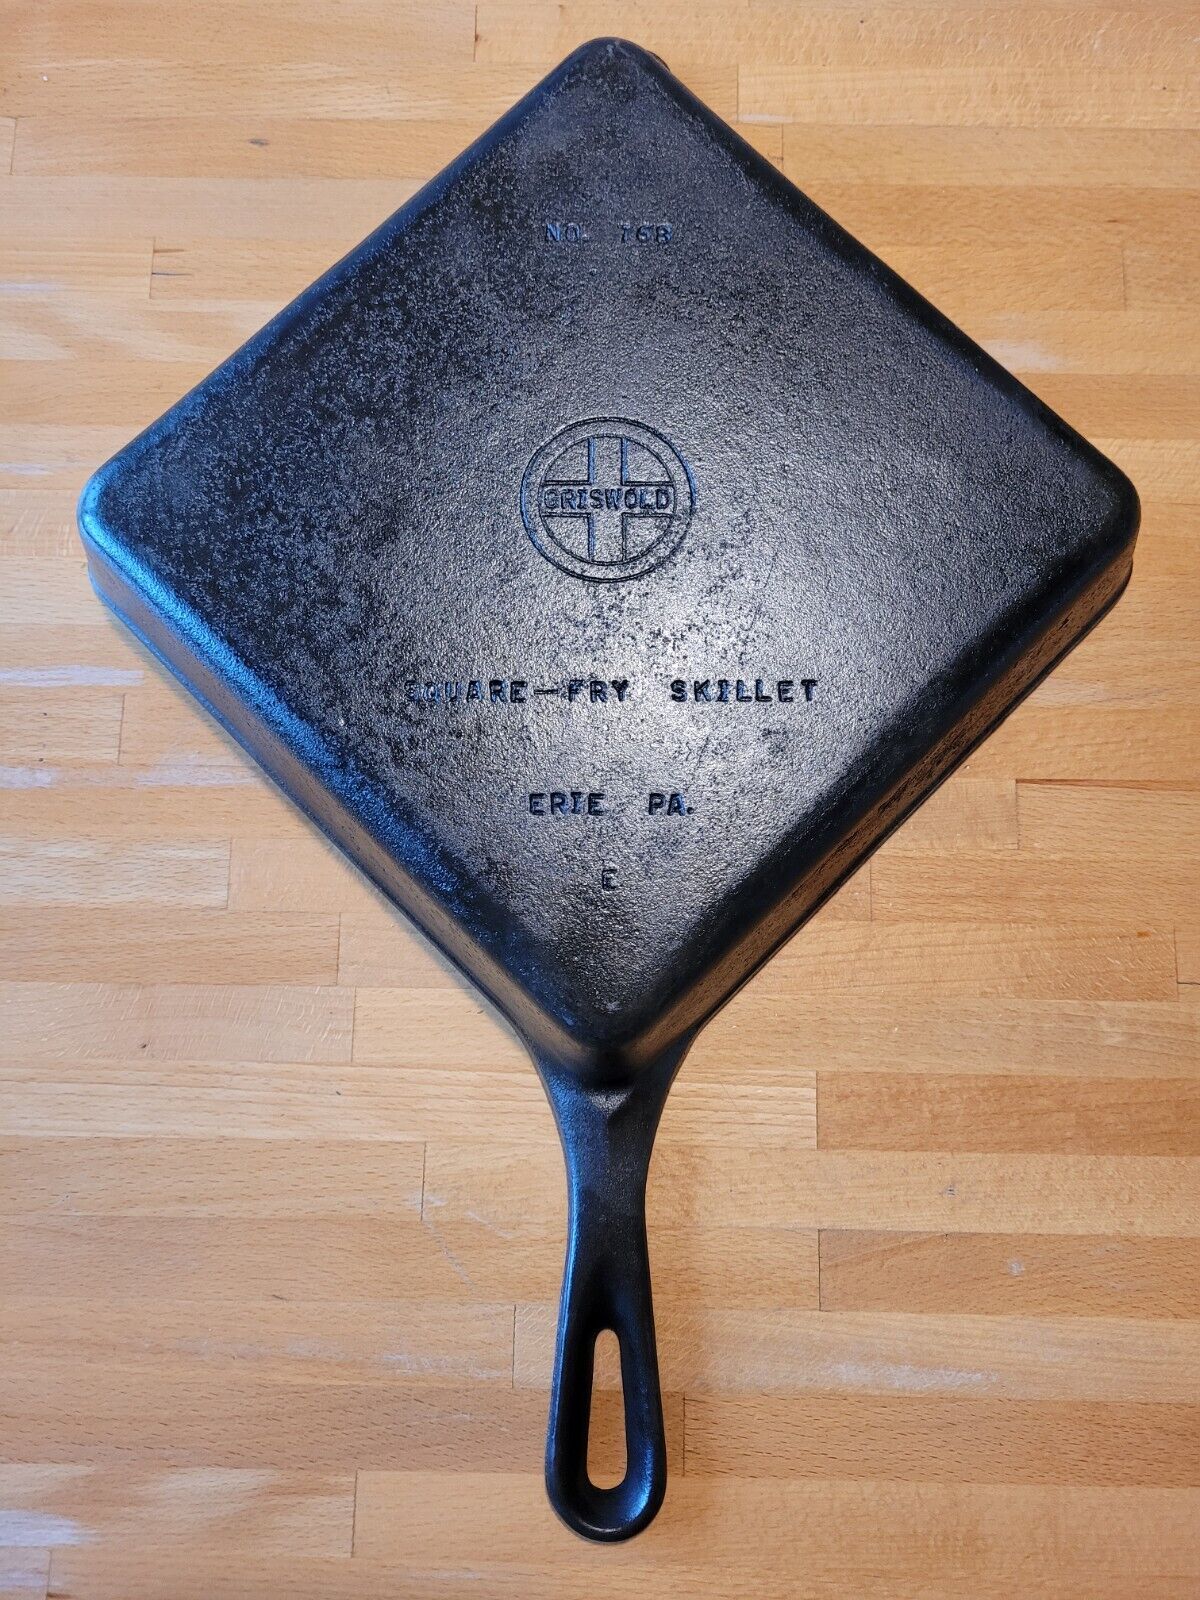 Vintage Griswold Square Cast Iron Skillet No.768